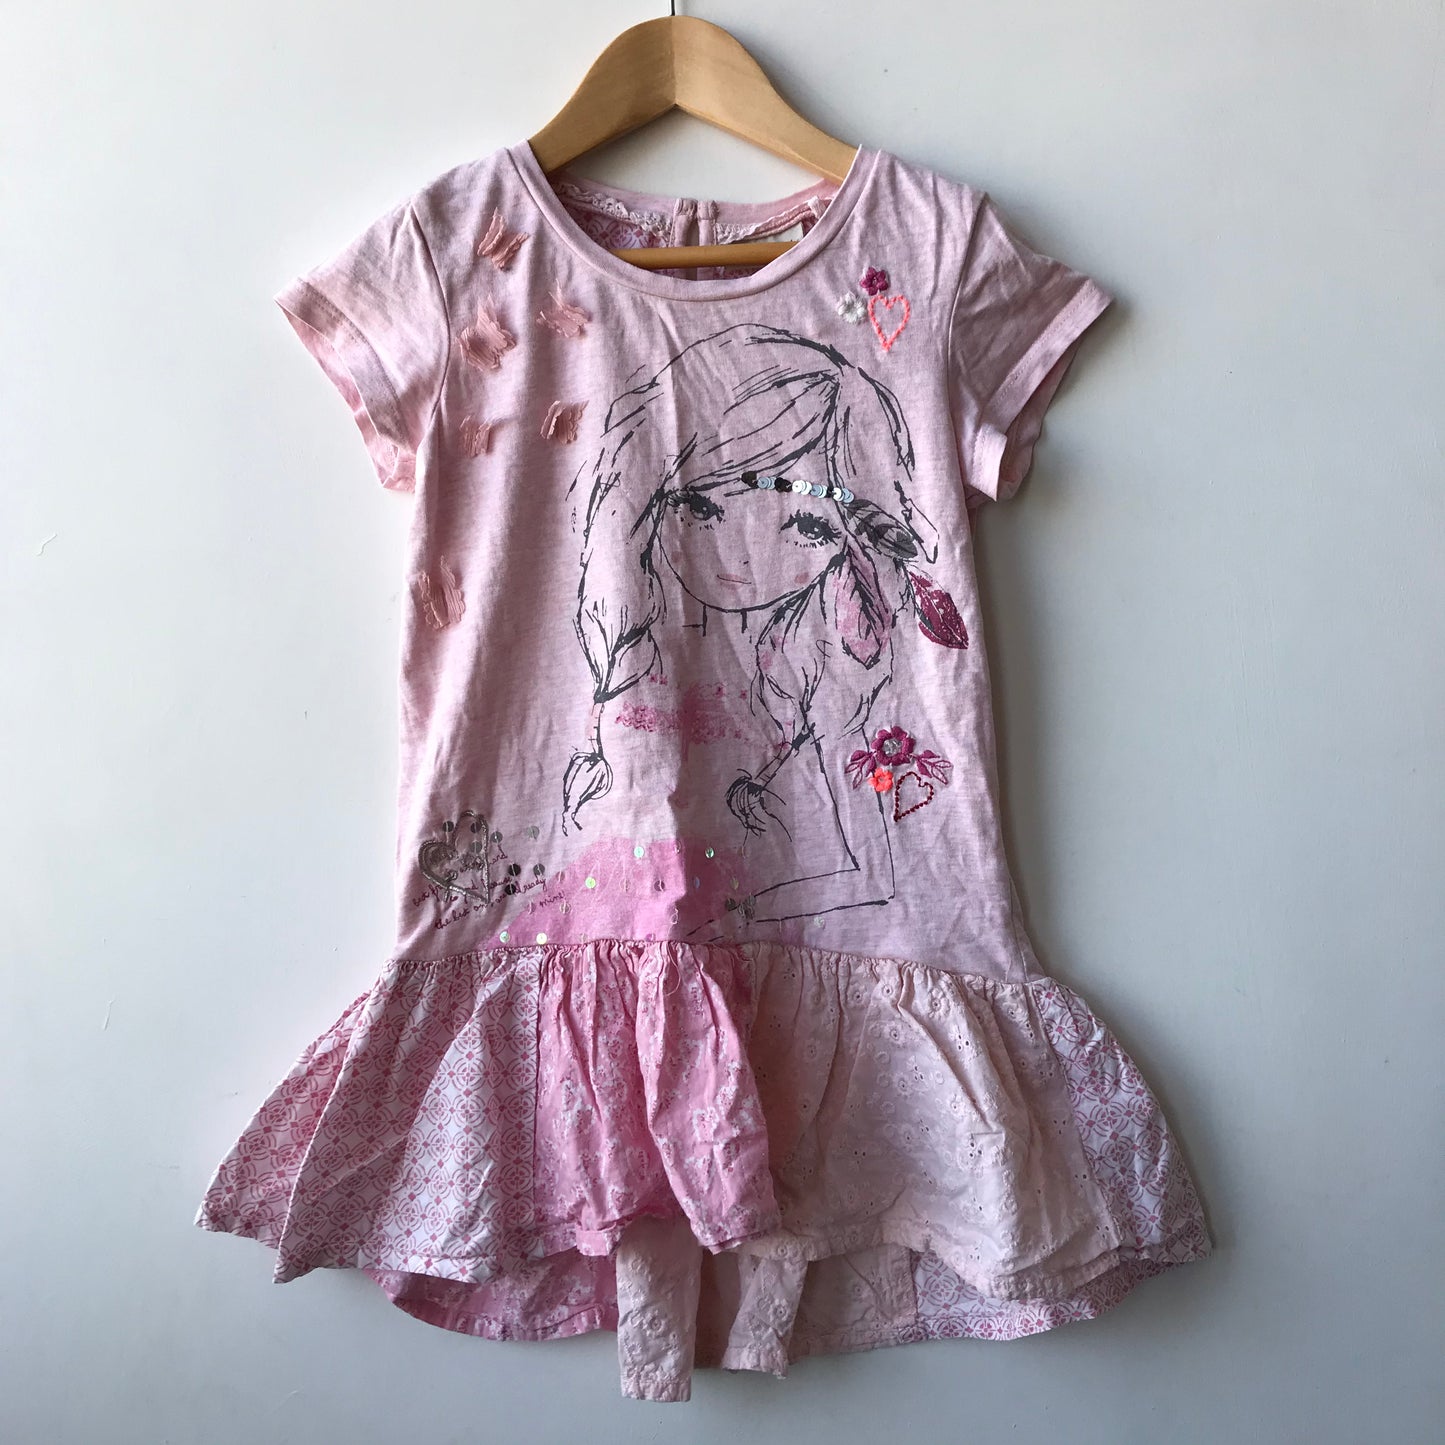 Dress - NEXT Pink - Age 6